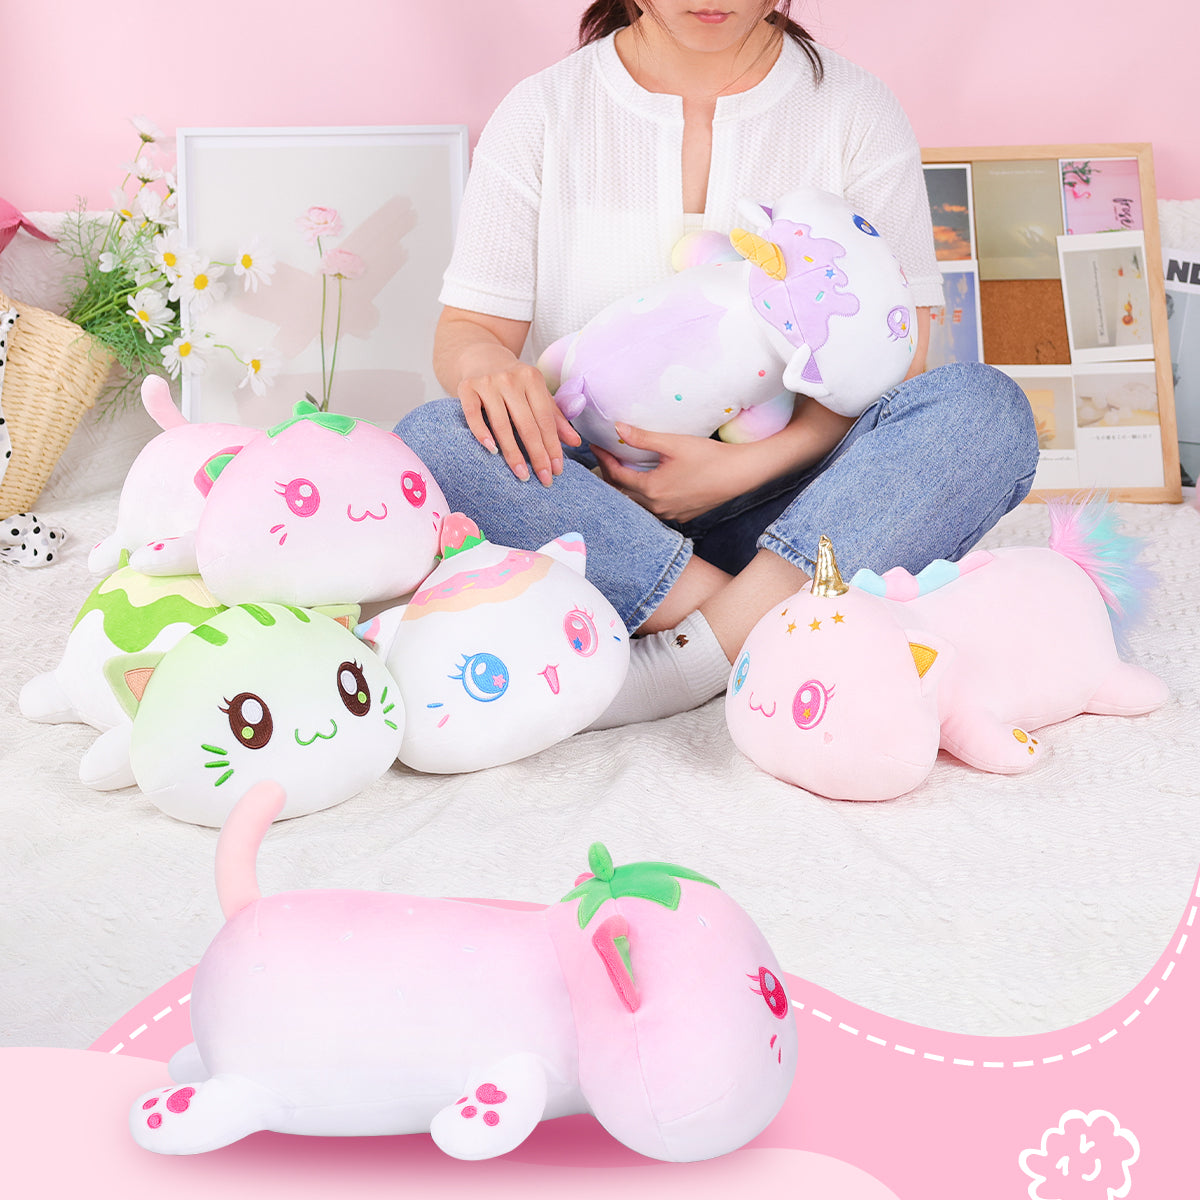 13.75 Inch Pink Cute Strawberry Cat Plush Pillow Cat Stuffed Animal, Soft Cute Cat Plush Kids Gift